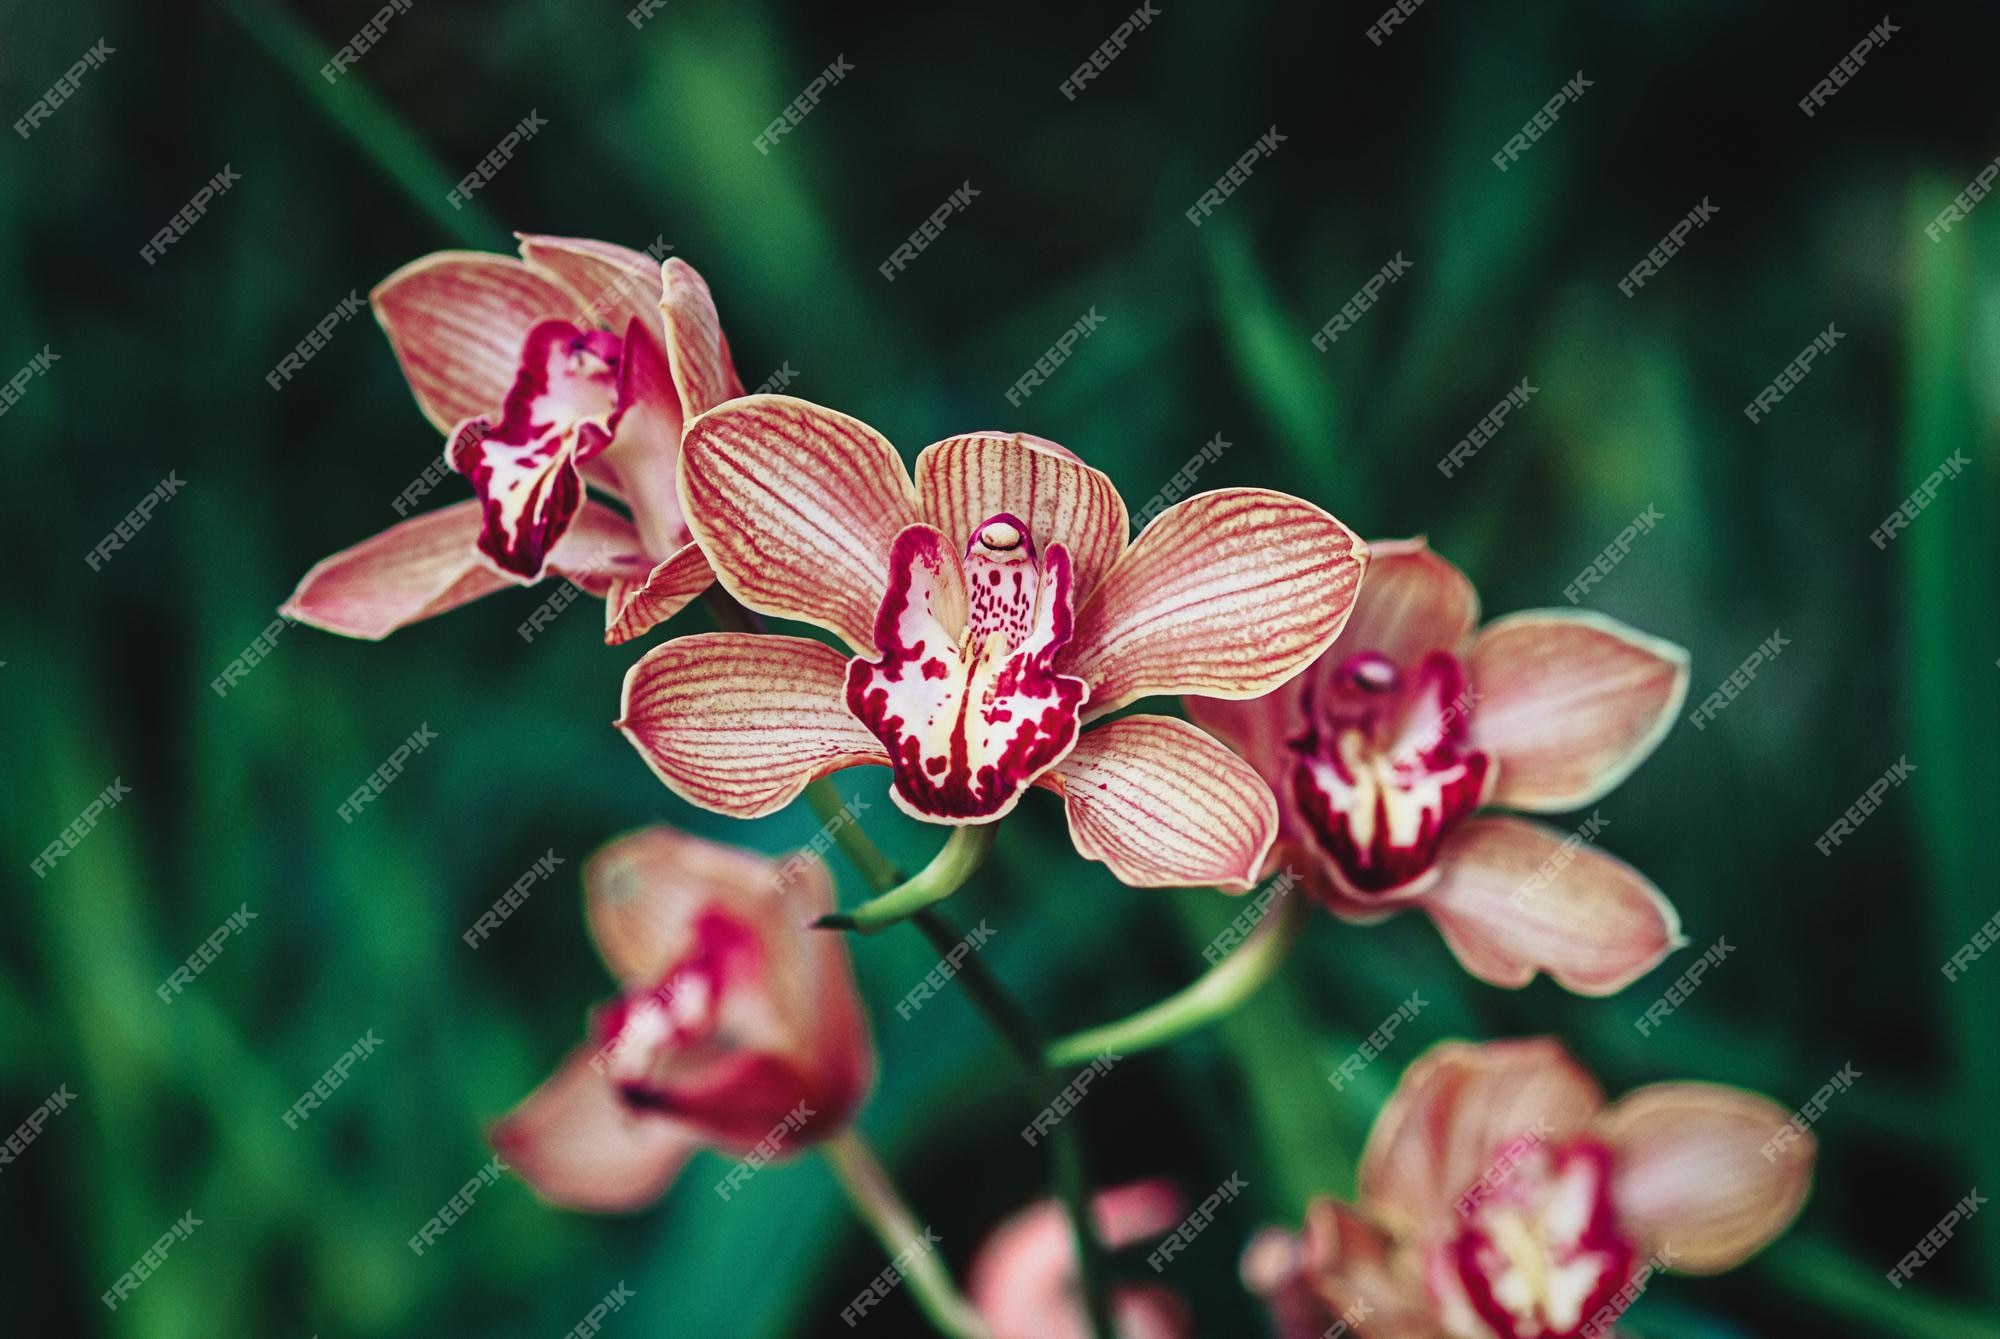 Cymbidium (orquídea de barco) flores marrom-alaranjadas no jardim de  orquídeas, closeup | Foto Premium